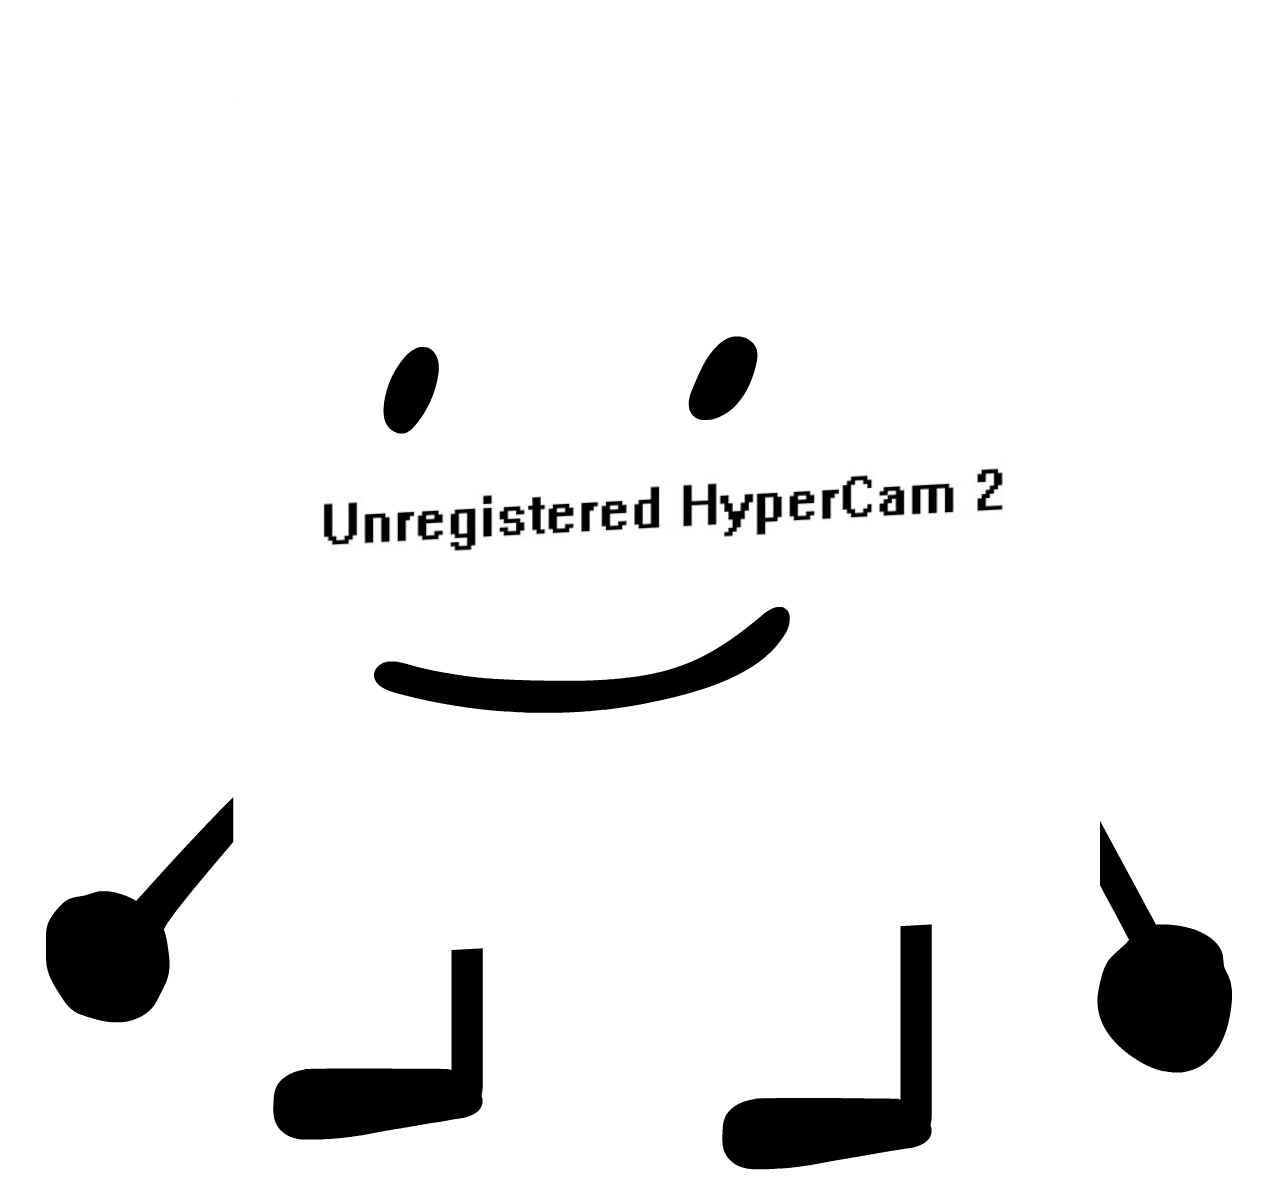 unregistered hypercam 2 download